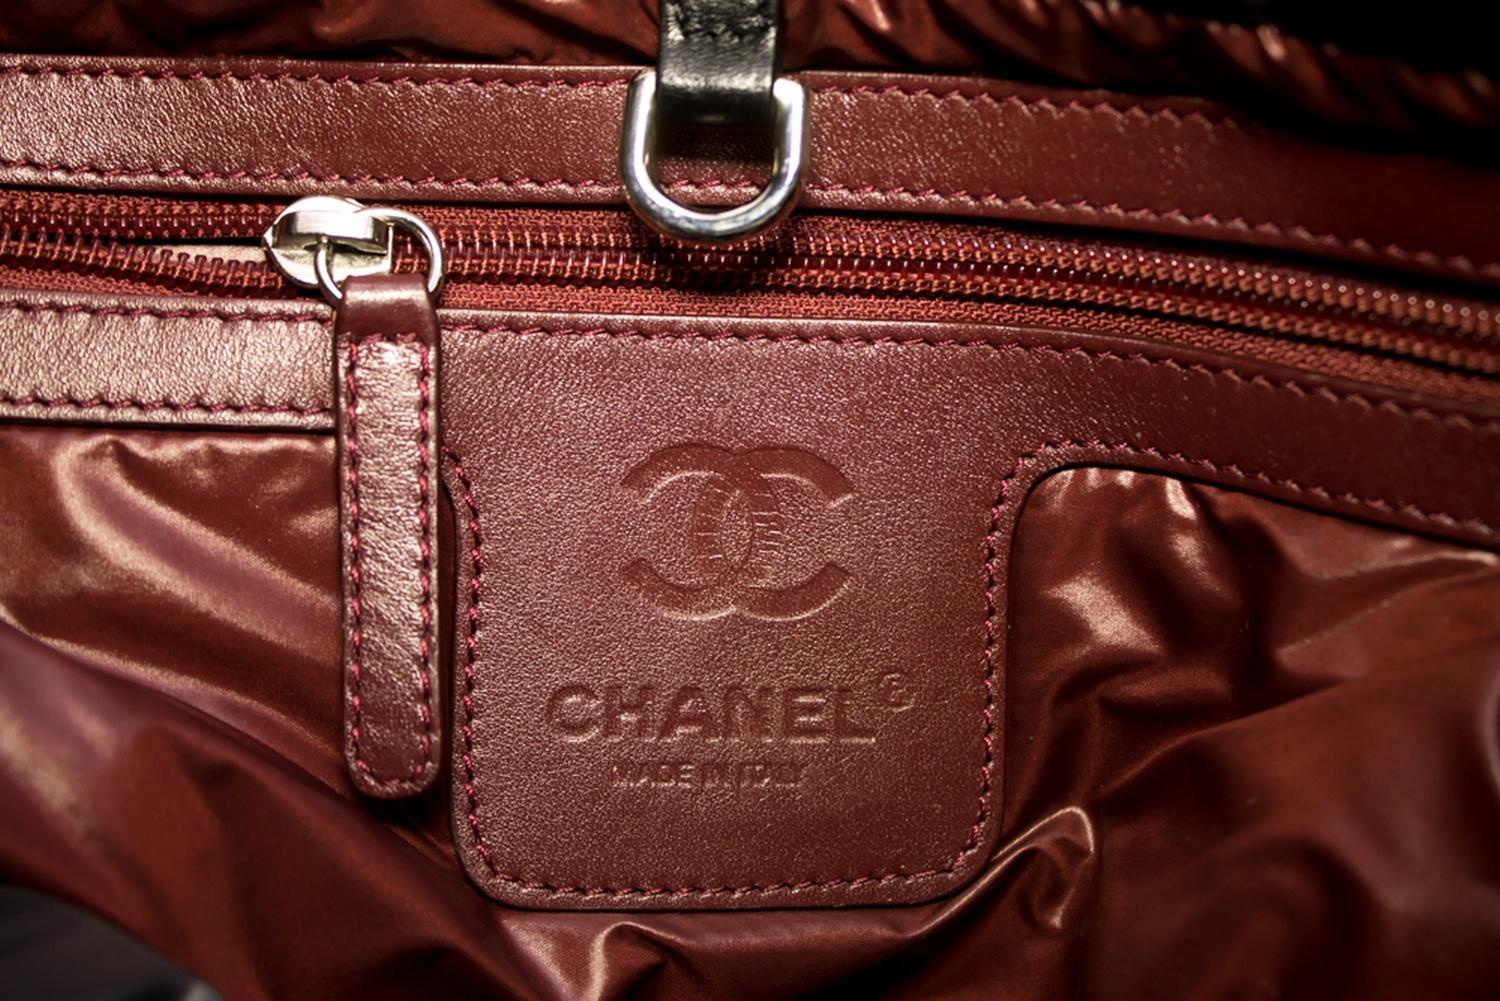 CHANEL Coco Cocoon Nylon Tote Bag Handbag Black Bordeaux Leather 13